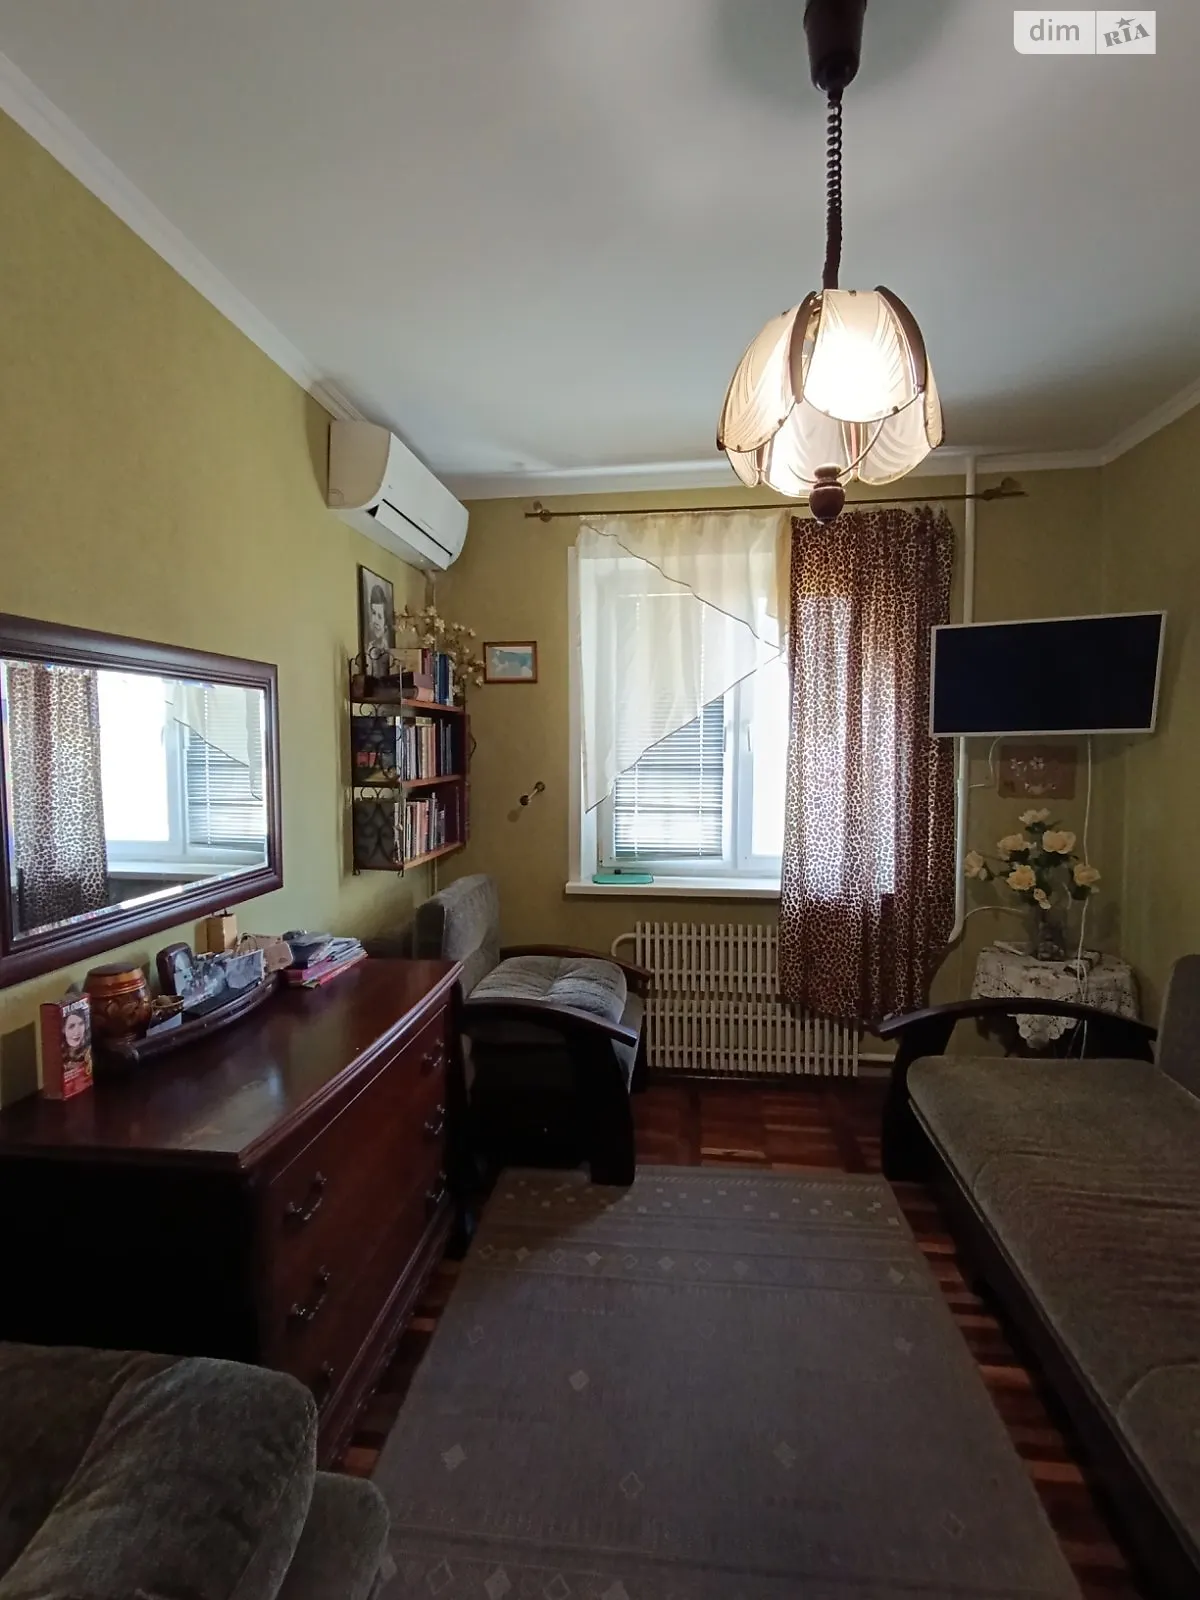 2-комнатная квартира 52 кв. м в Запорожье, ул. Запорожская - фото 1